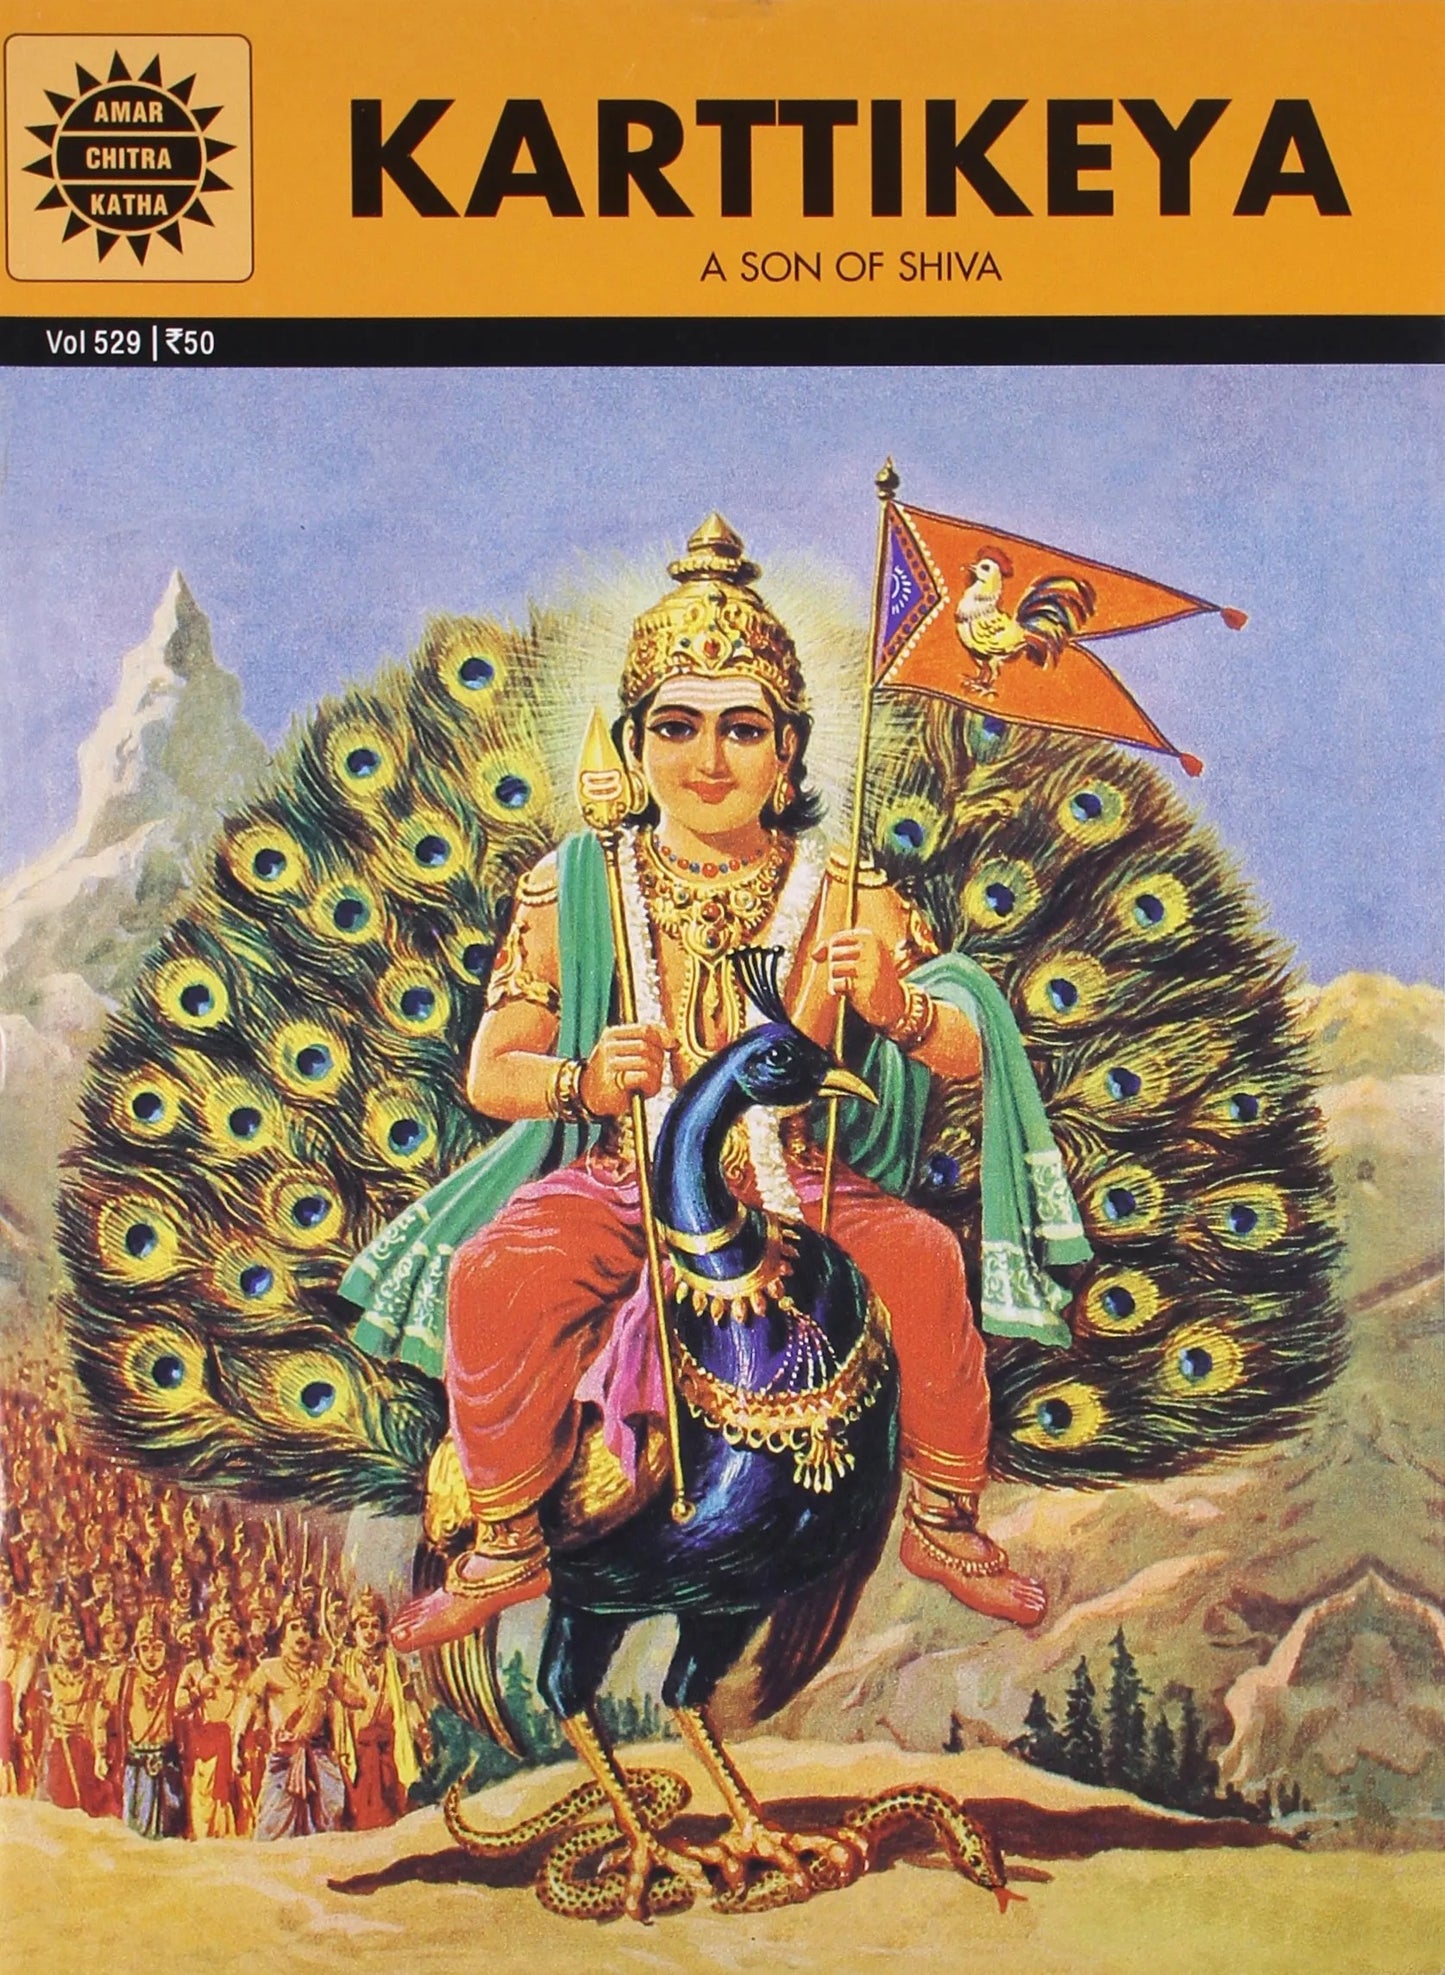 Amar Chitra Katha - Karttikeya - The Son of Shiva - Epics and Mythology